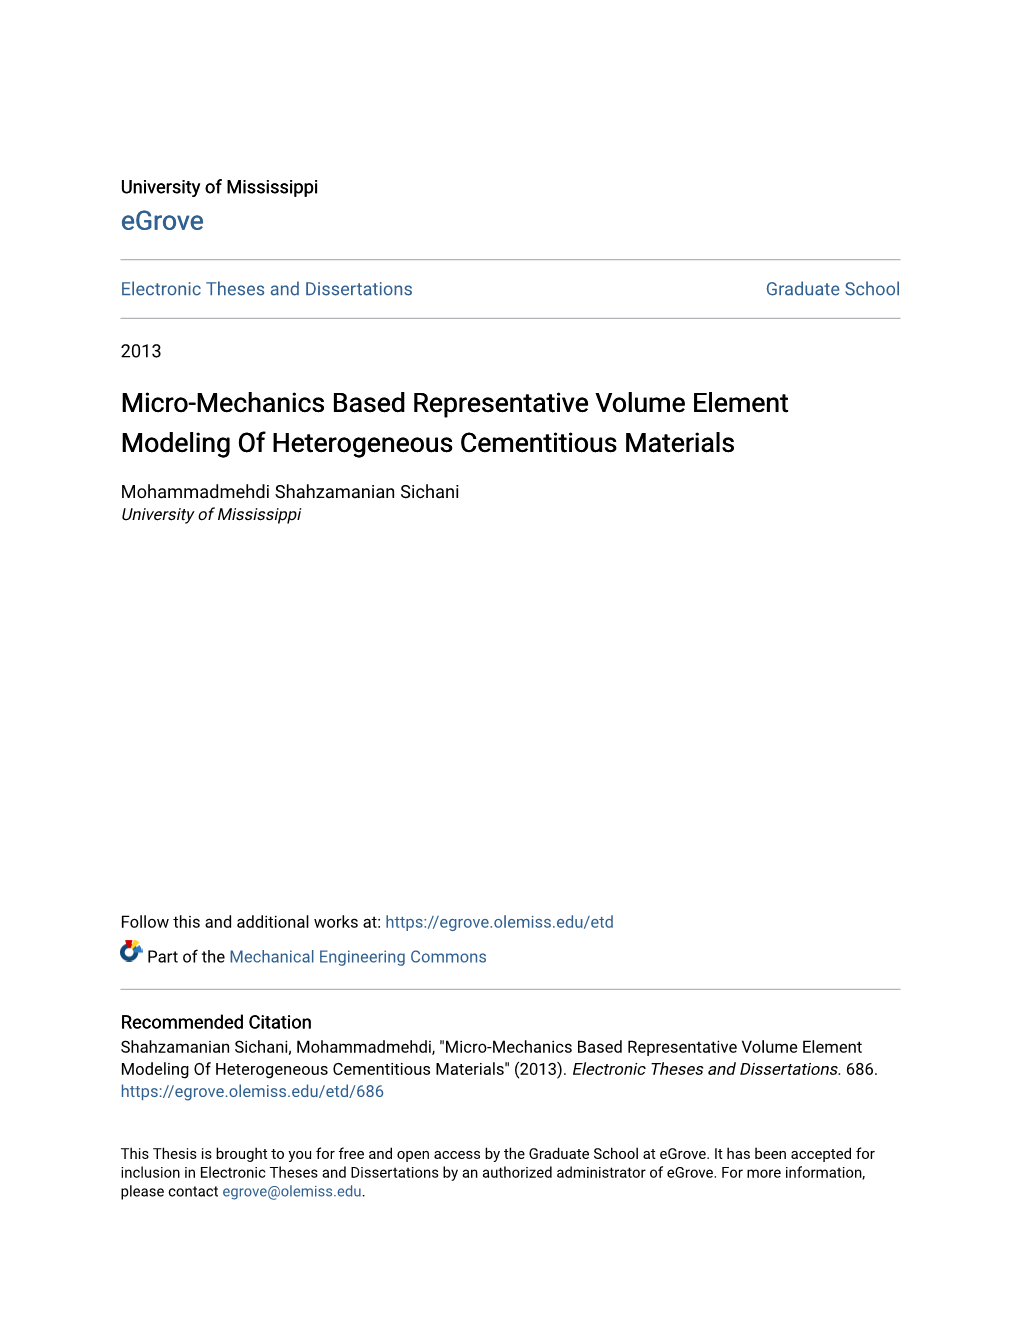 Micro-Mechanics Based Representative Volume Element Modeling of Heterogeneous Cementitious Materials